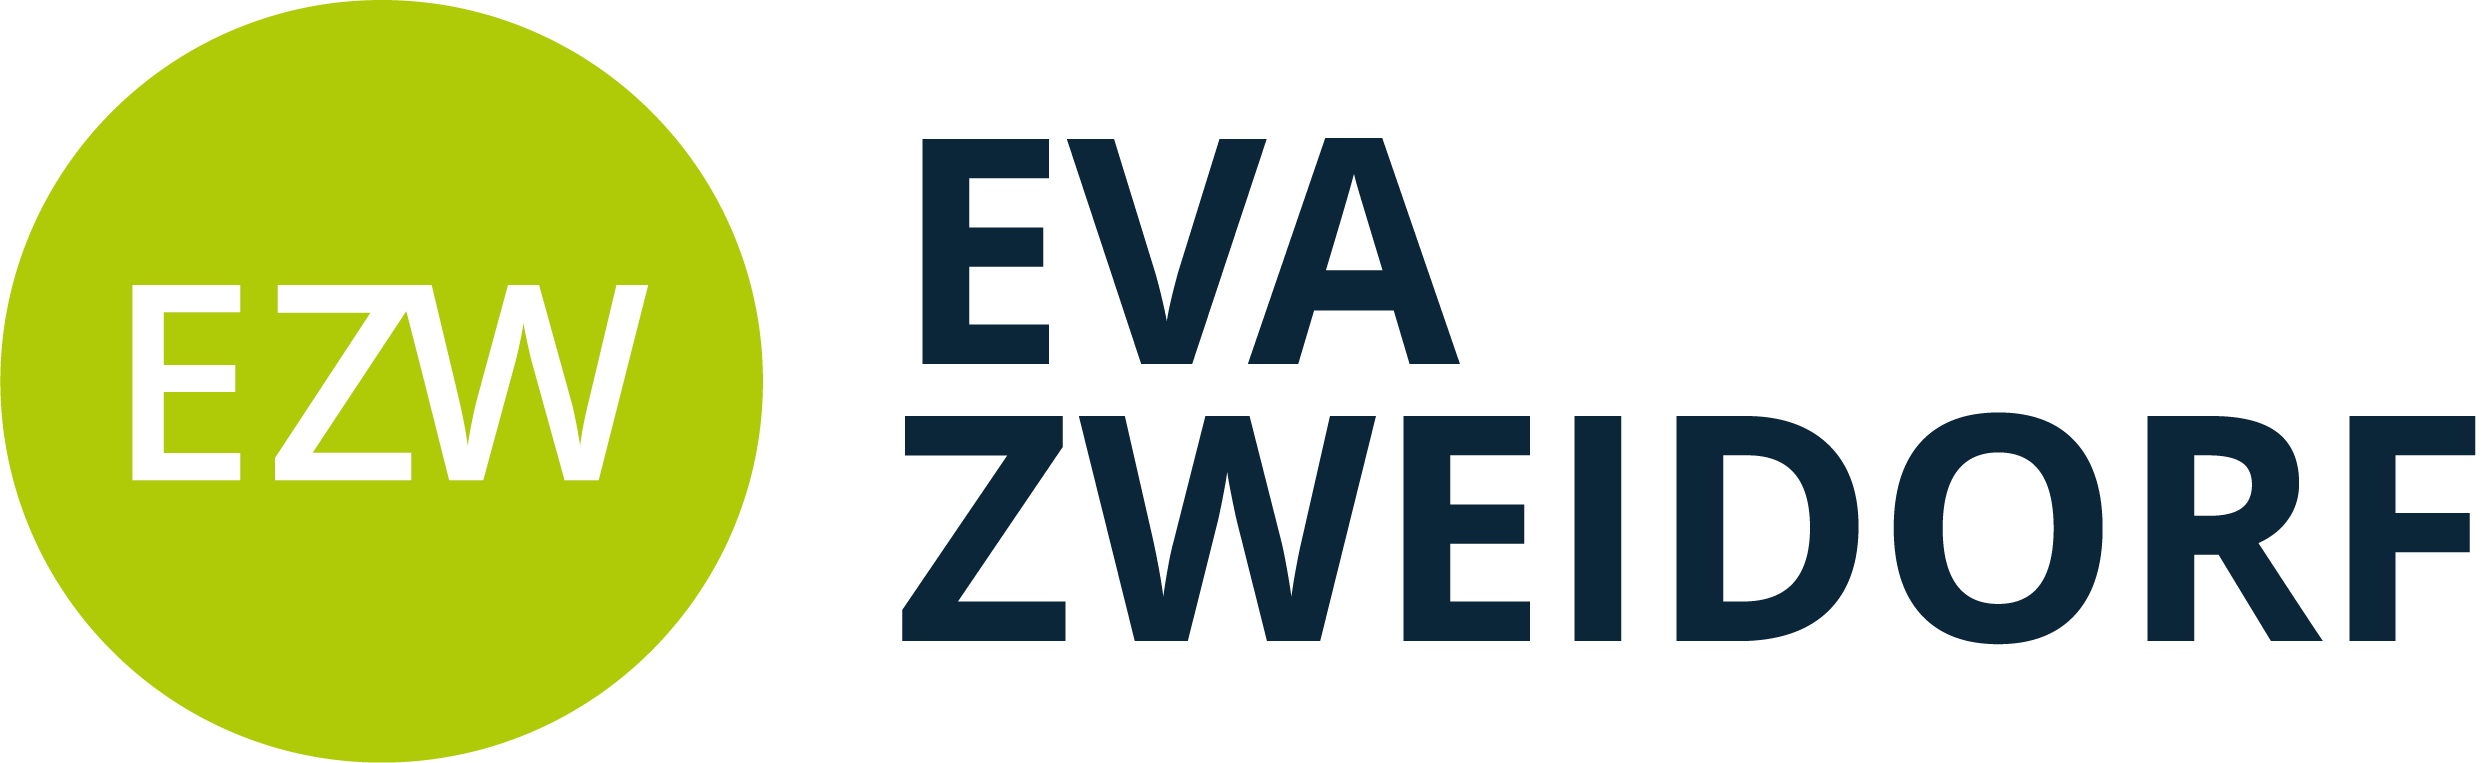 Eva Zweidorf